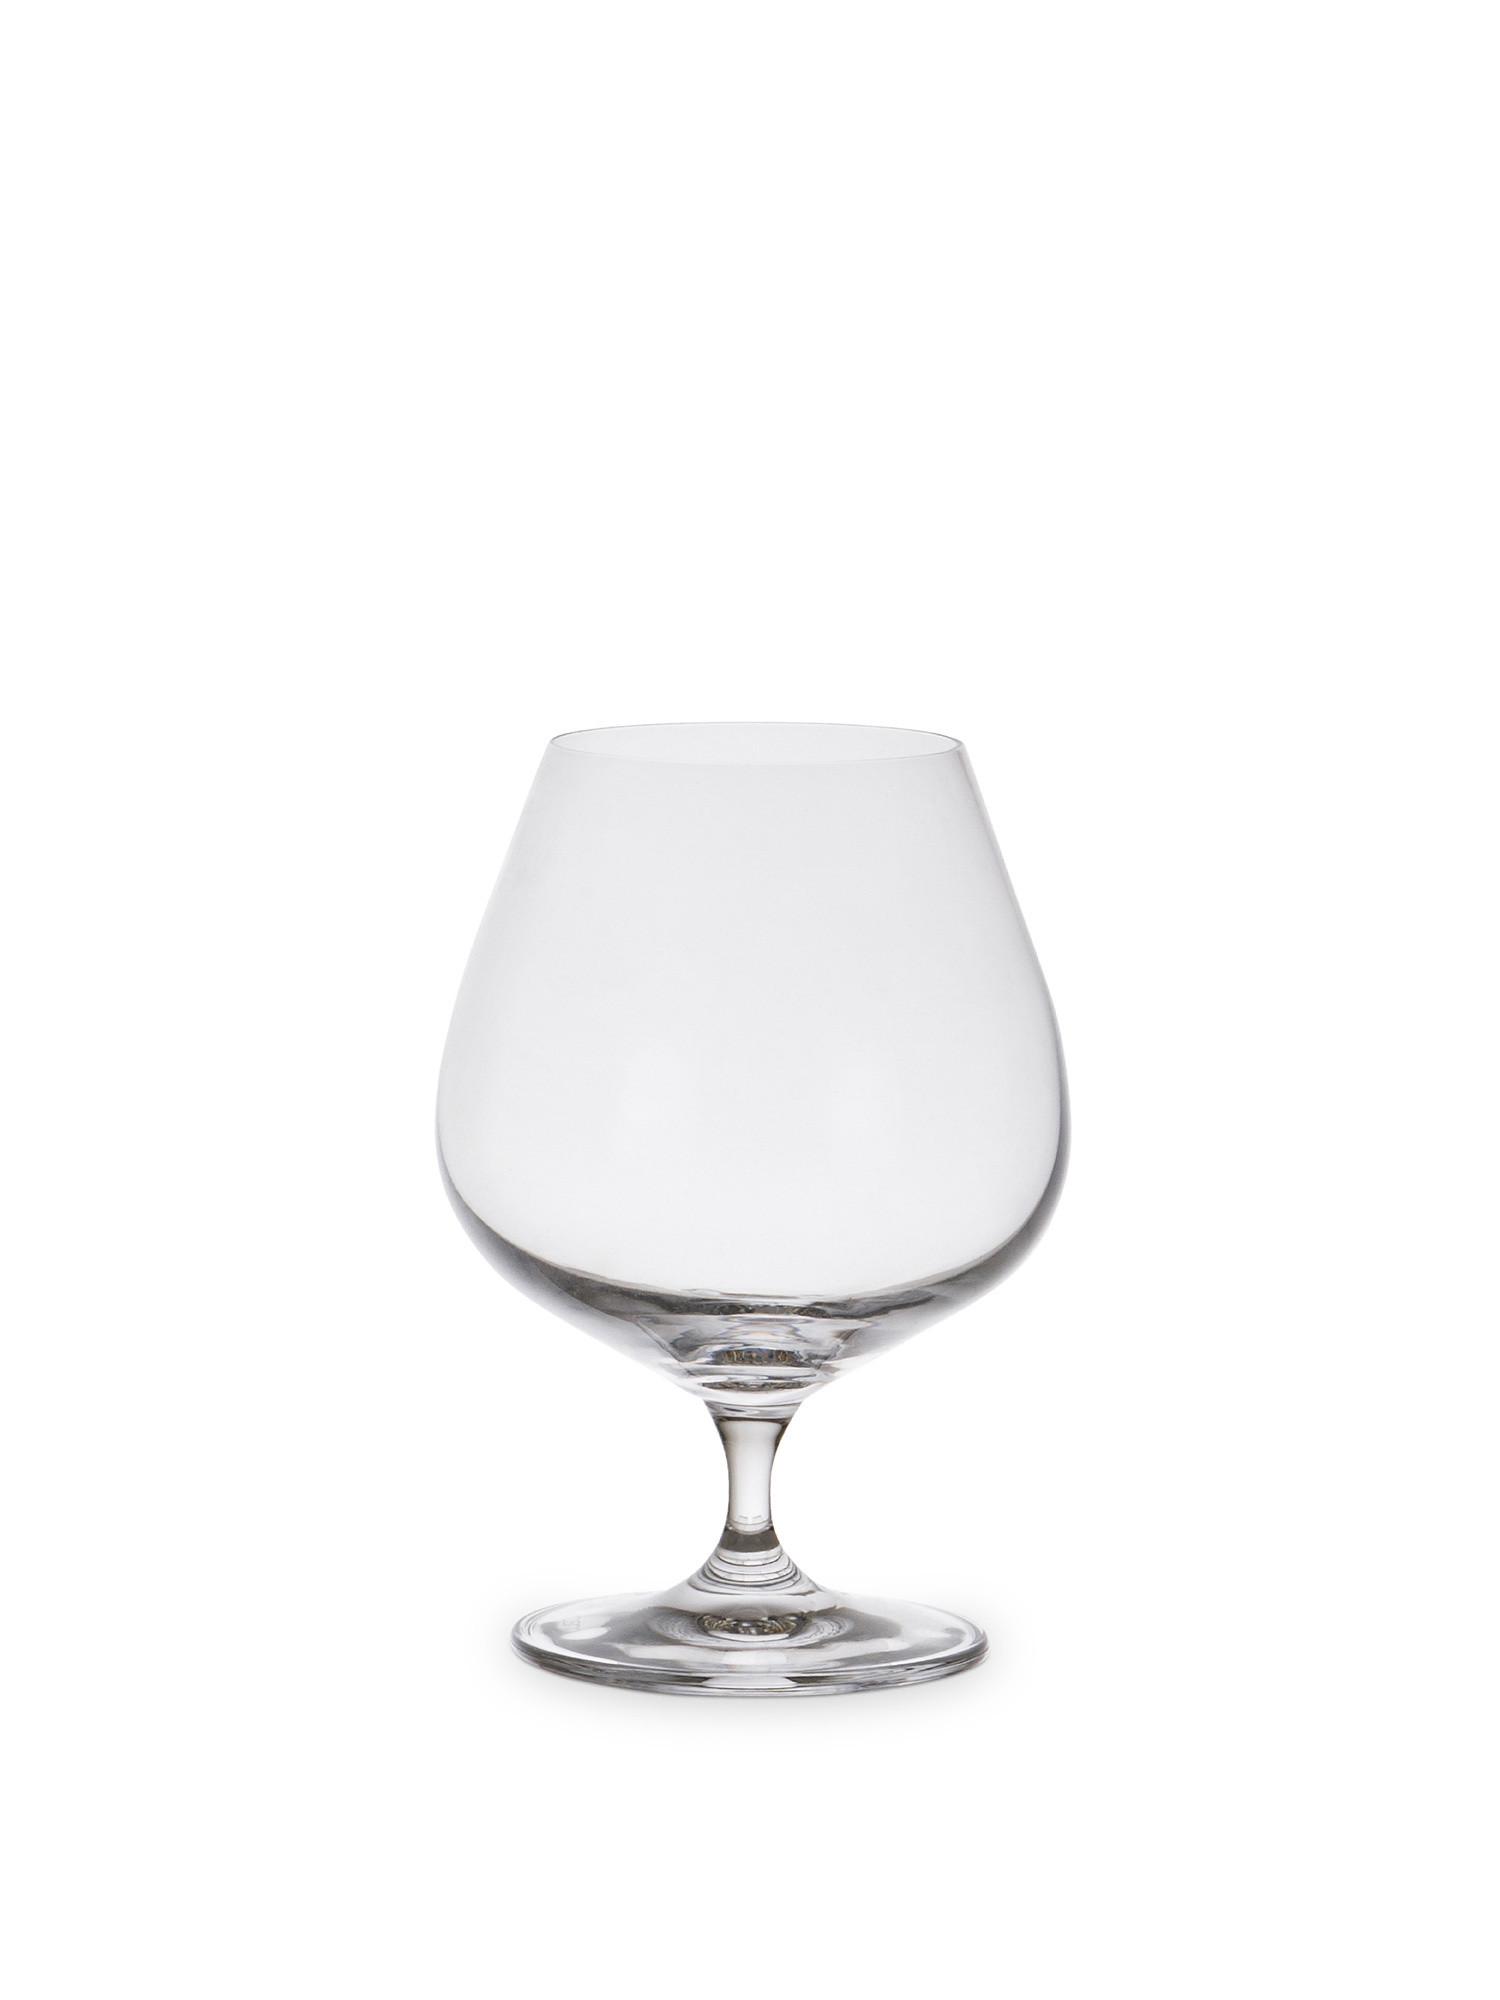 Calice cognac in cristallo, Trasparente, large image number 0